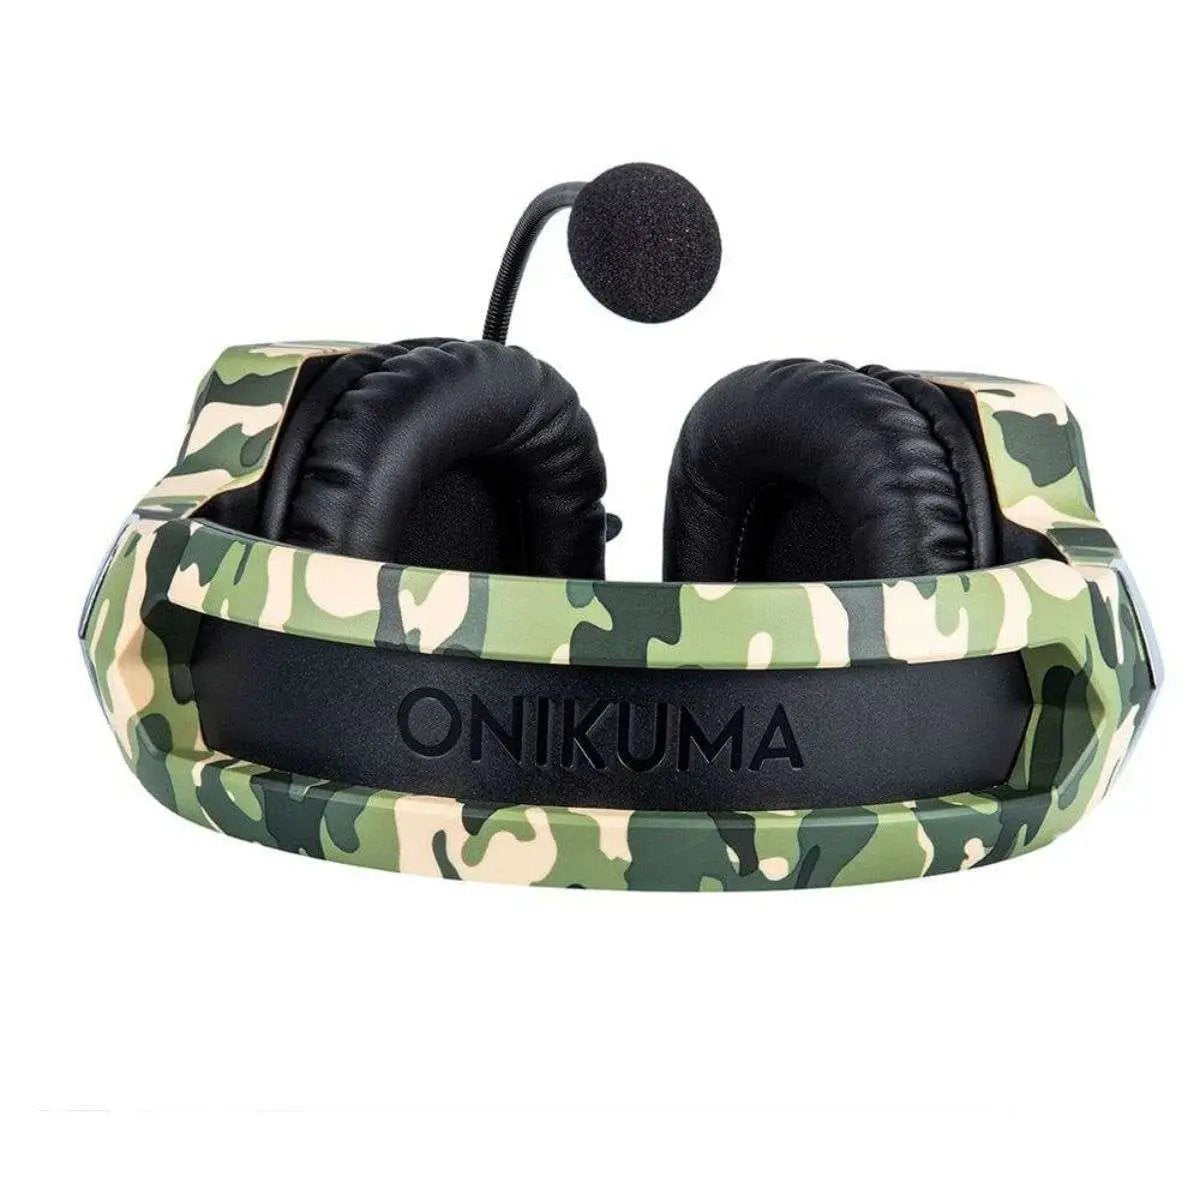 ONIKUMA K8 Wired Stereo Gaming Headphones With Mic LED Lights - Hugmie